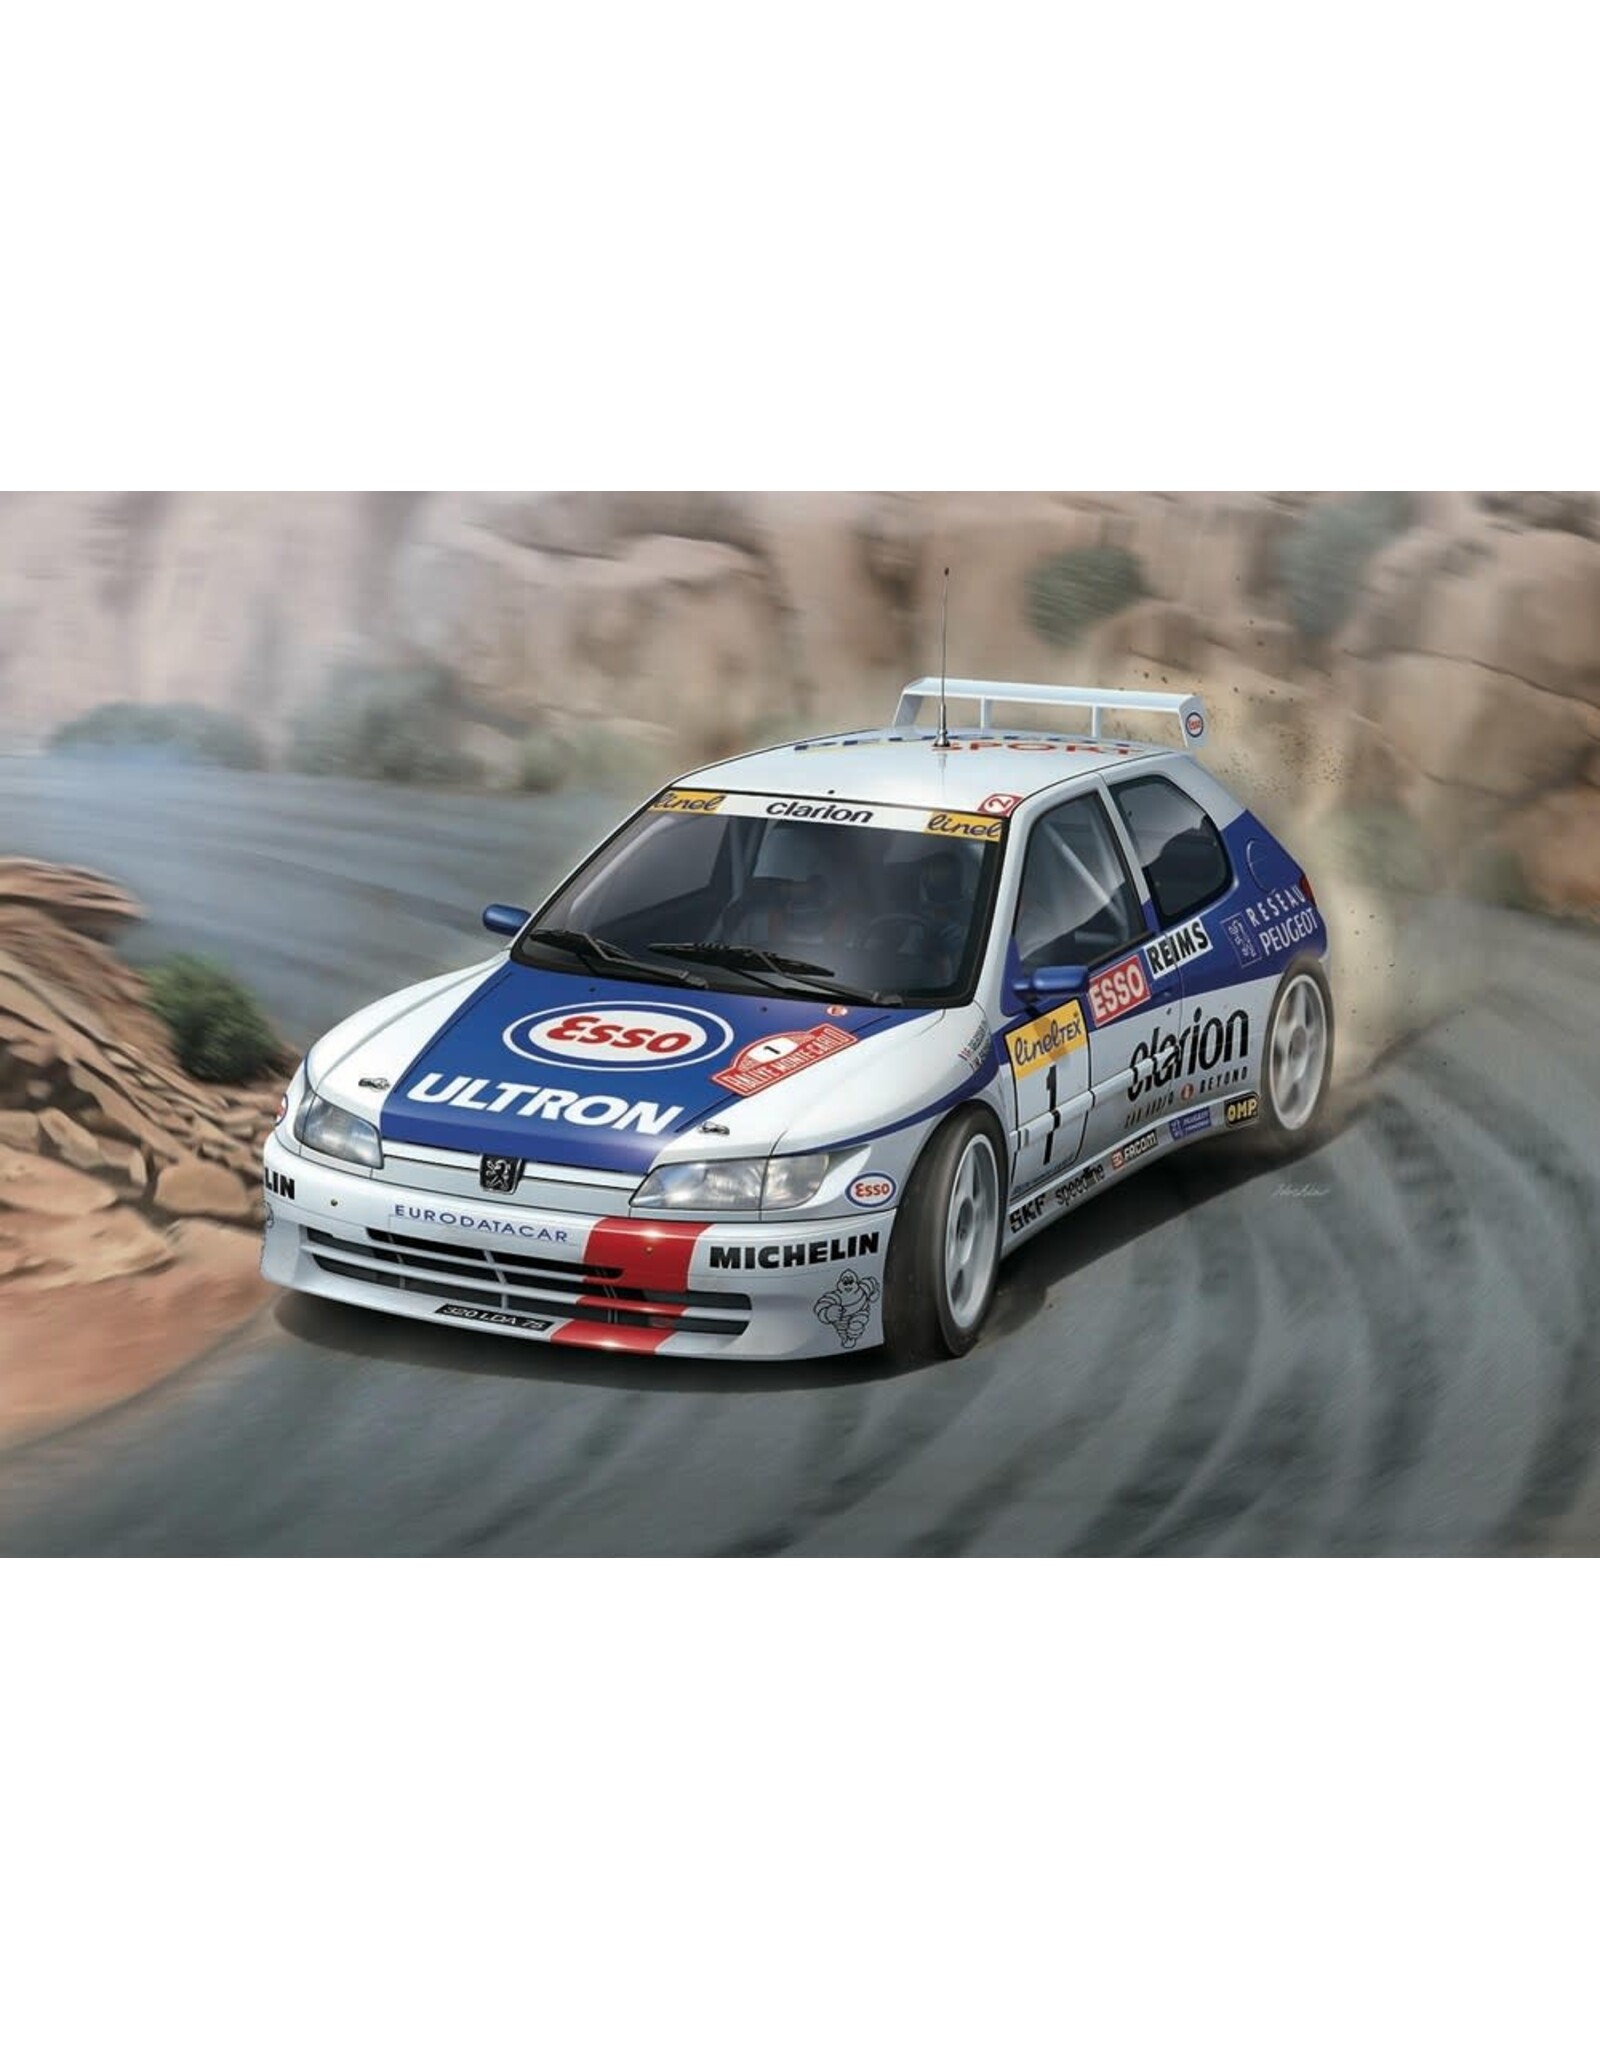 Platz 1/24 PEUGEOT 306 MAXI 1996 Monte Carlo Rally, Vehicle